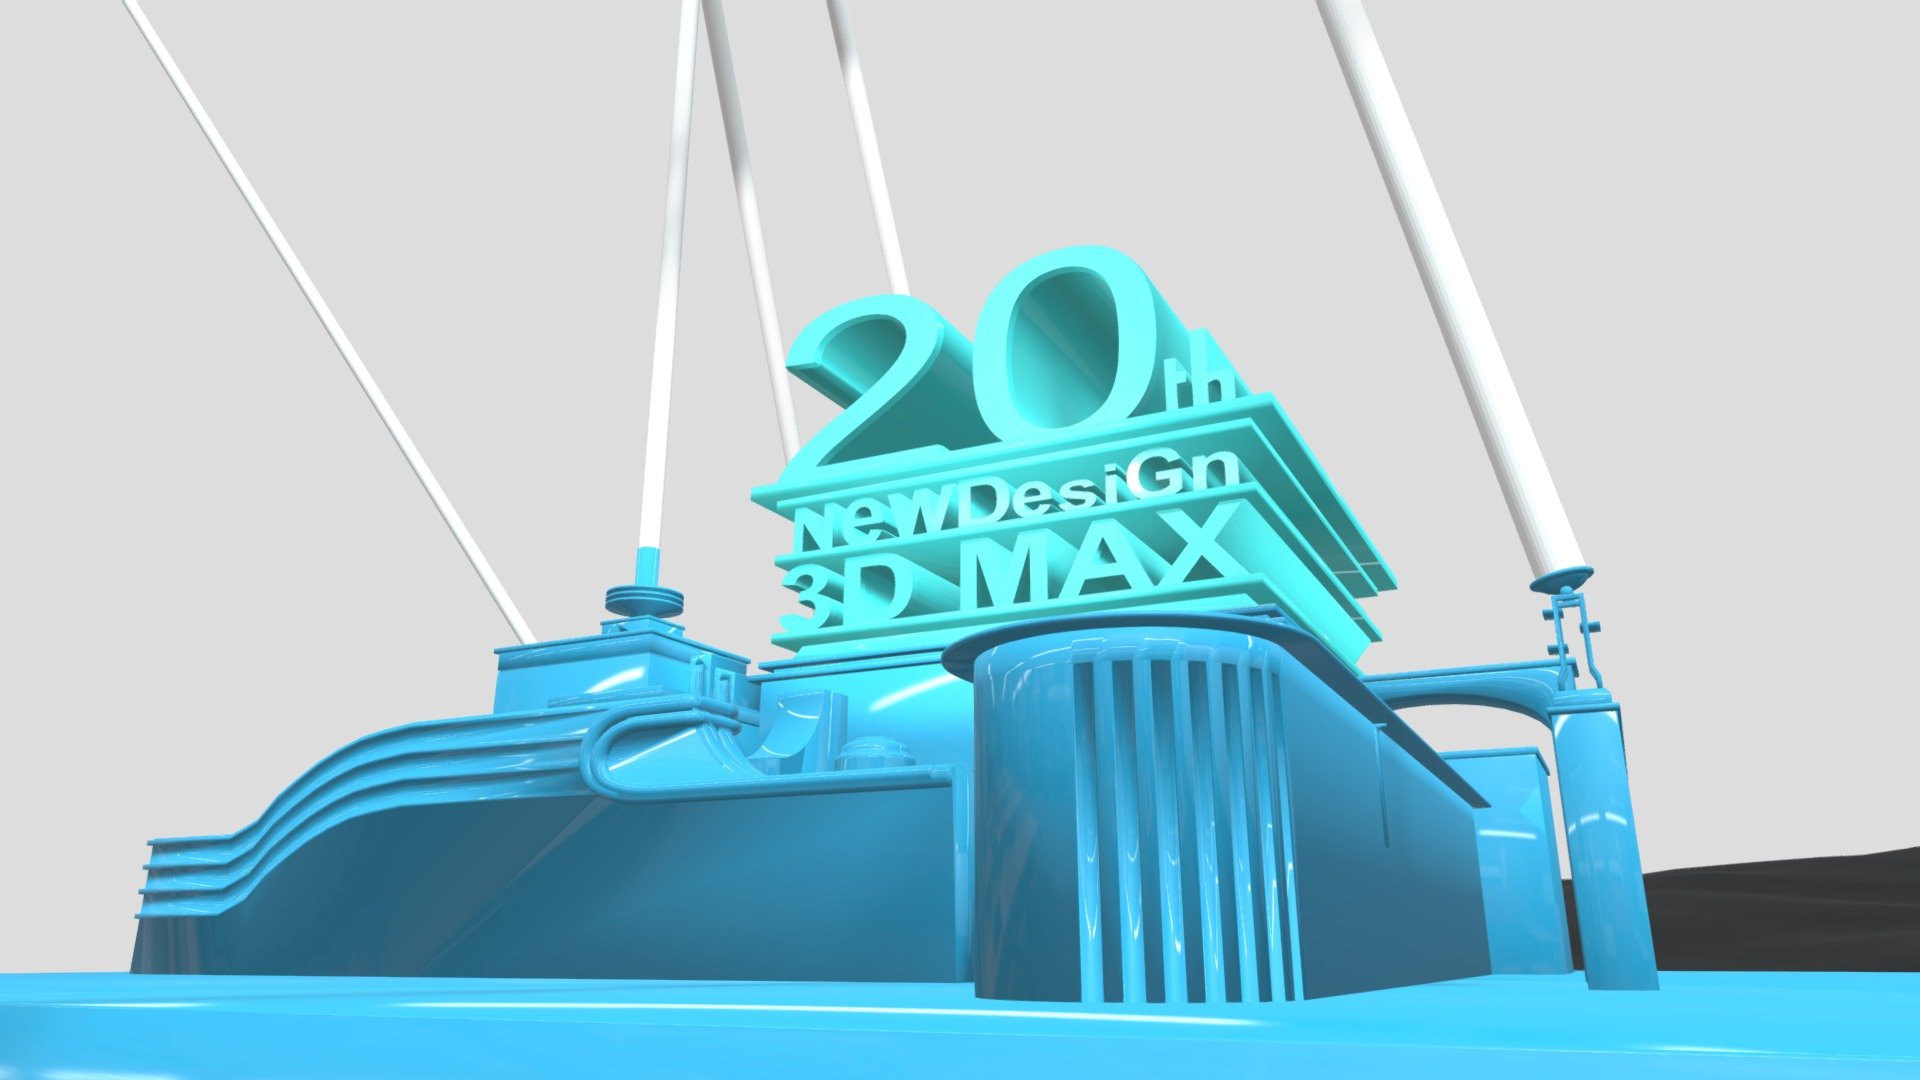 20th New Design 3D Max Logo Remake 3D Model By Demorea Simpson